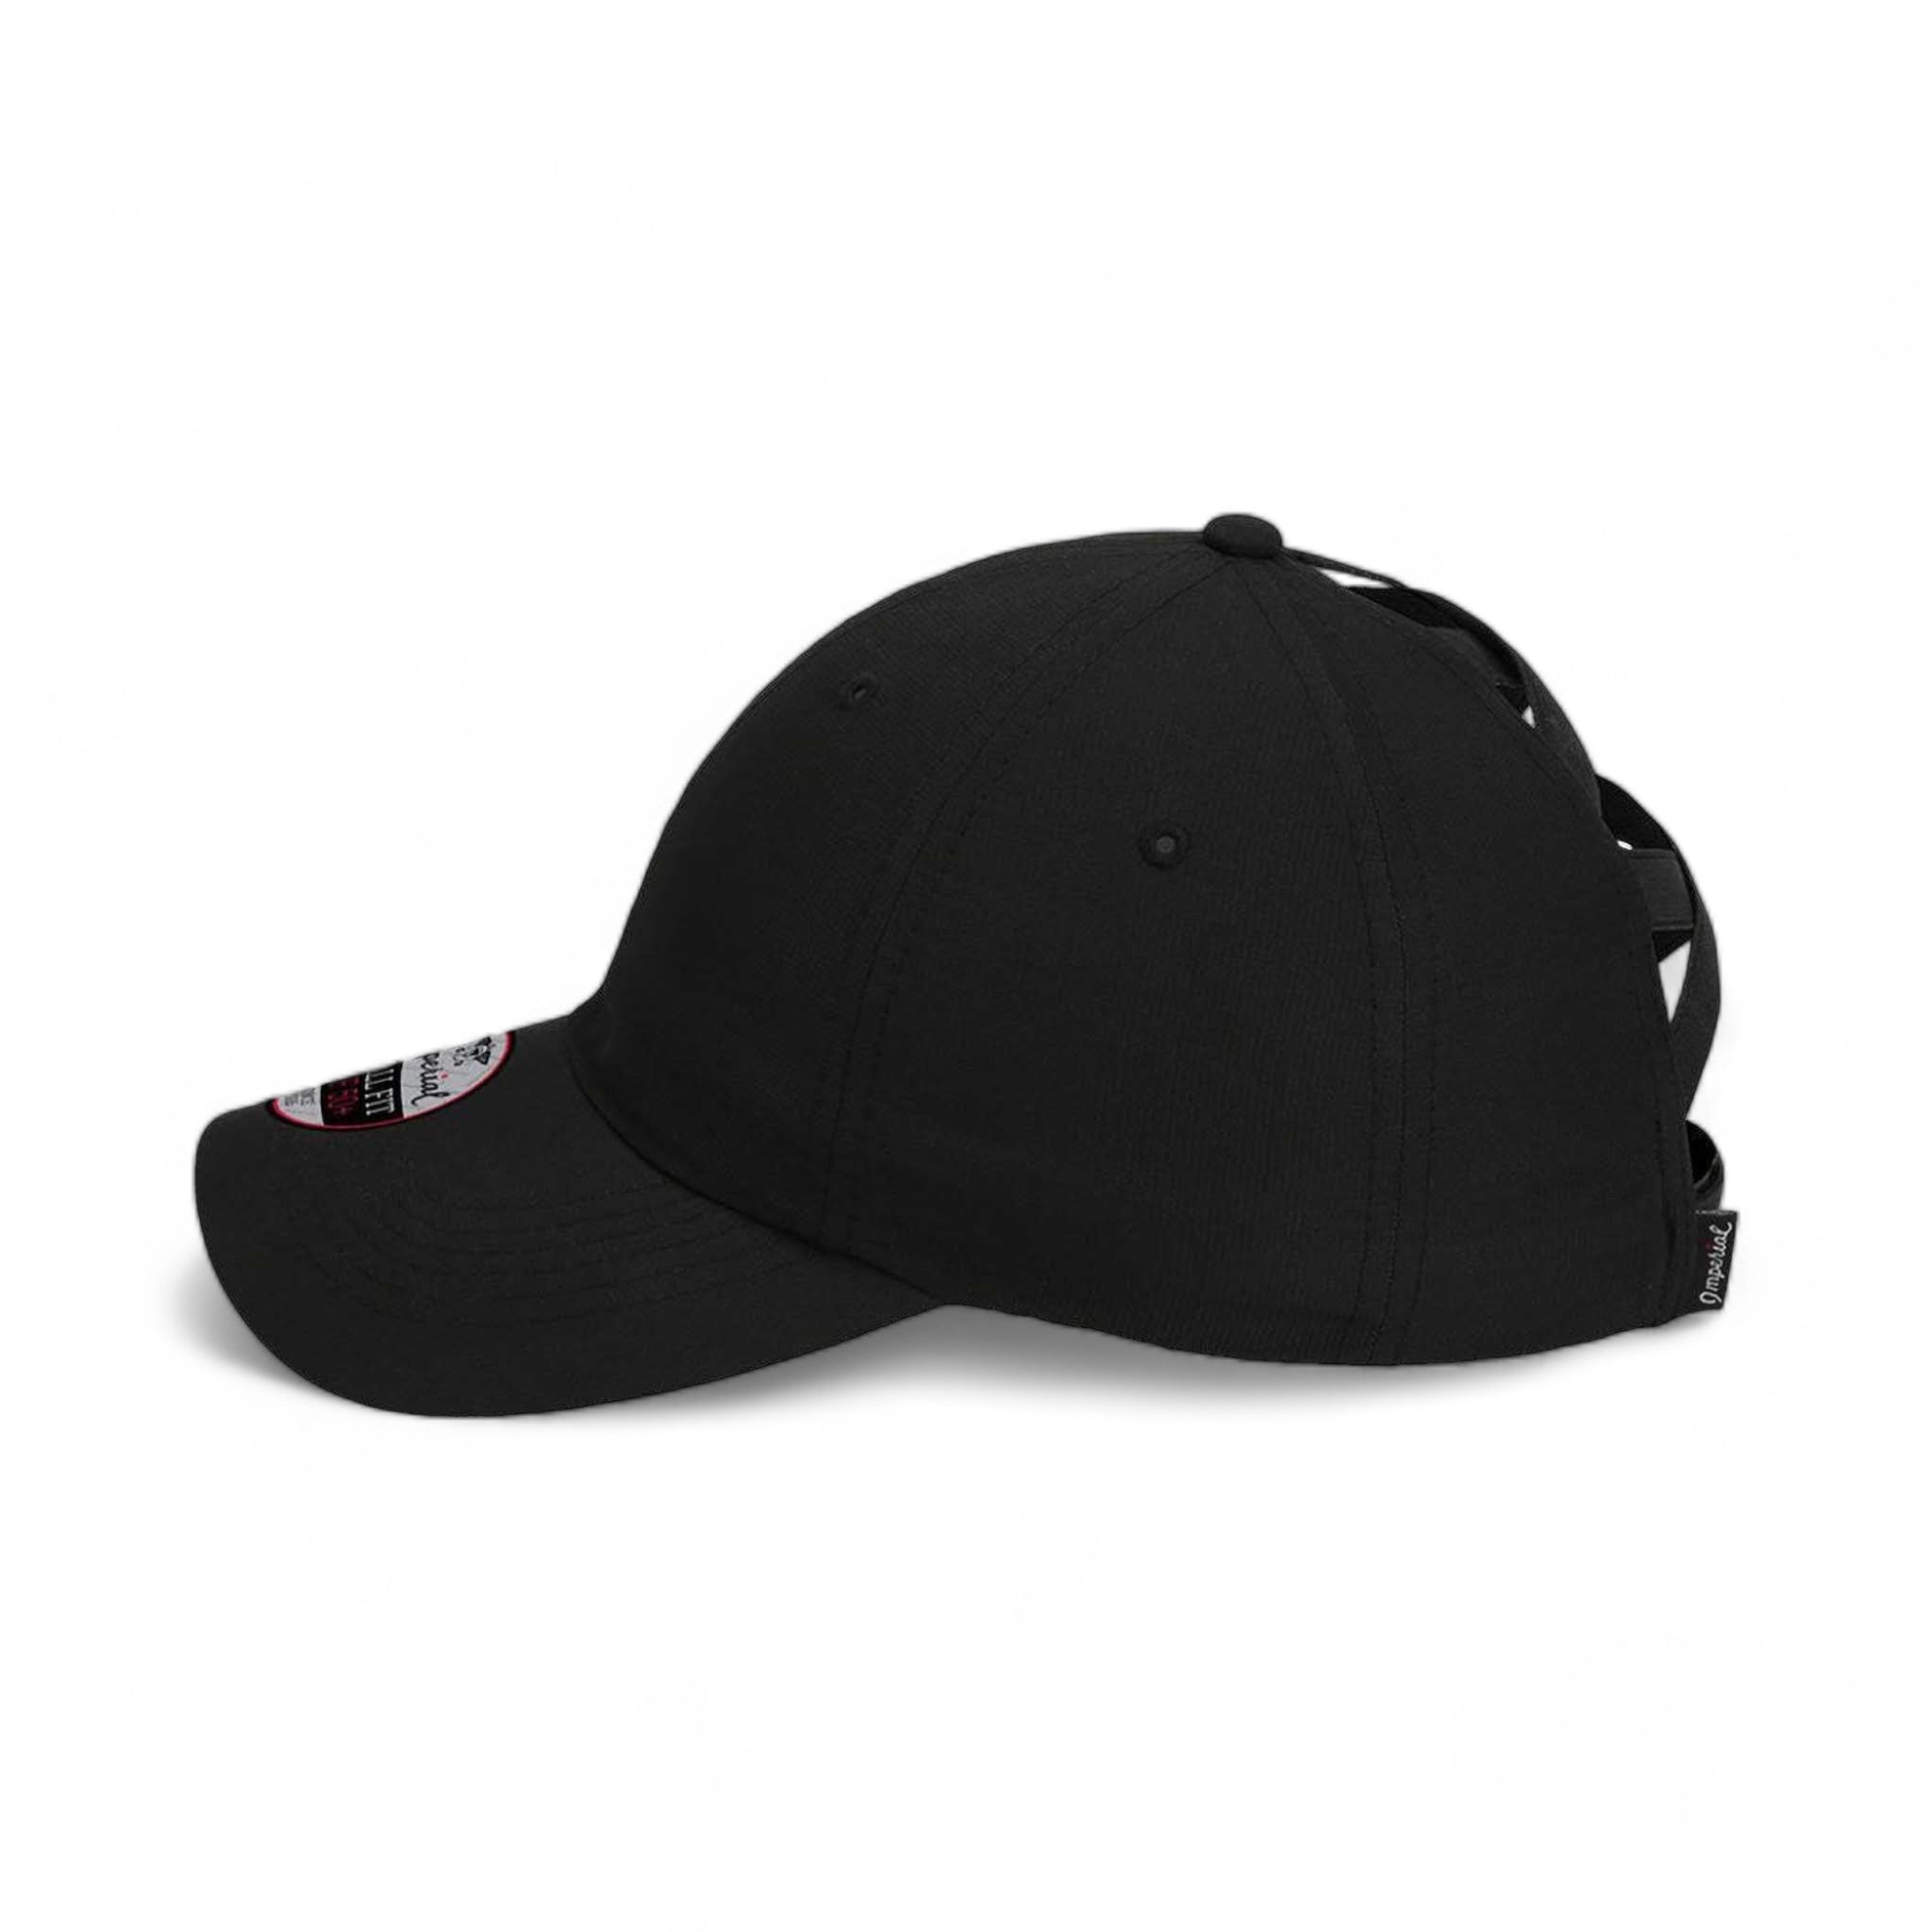 Side view of Imperial L338 custom hat in black